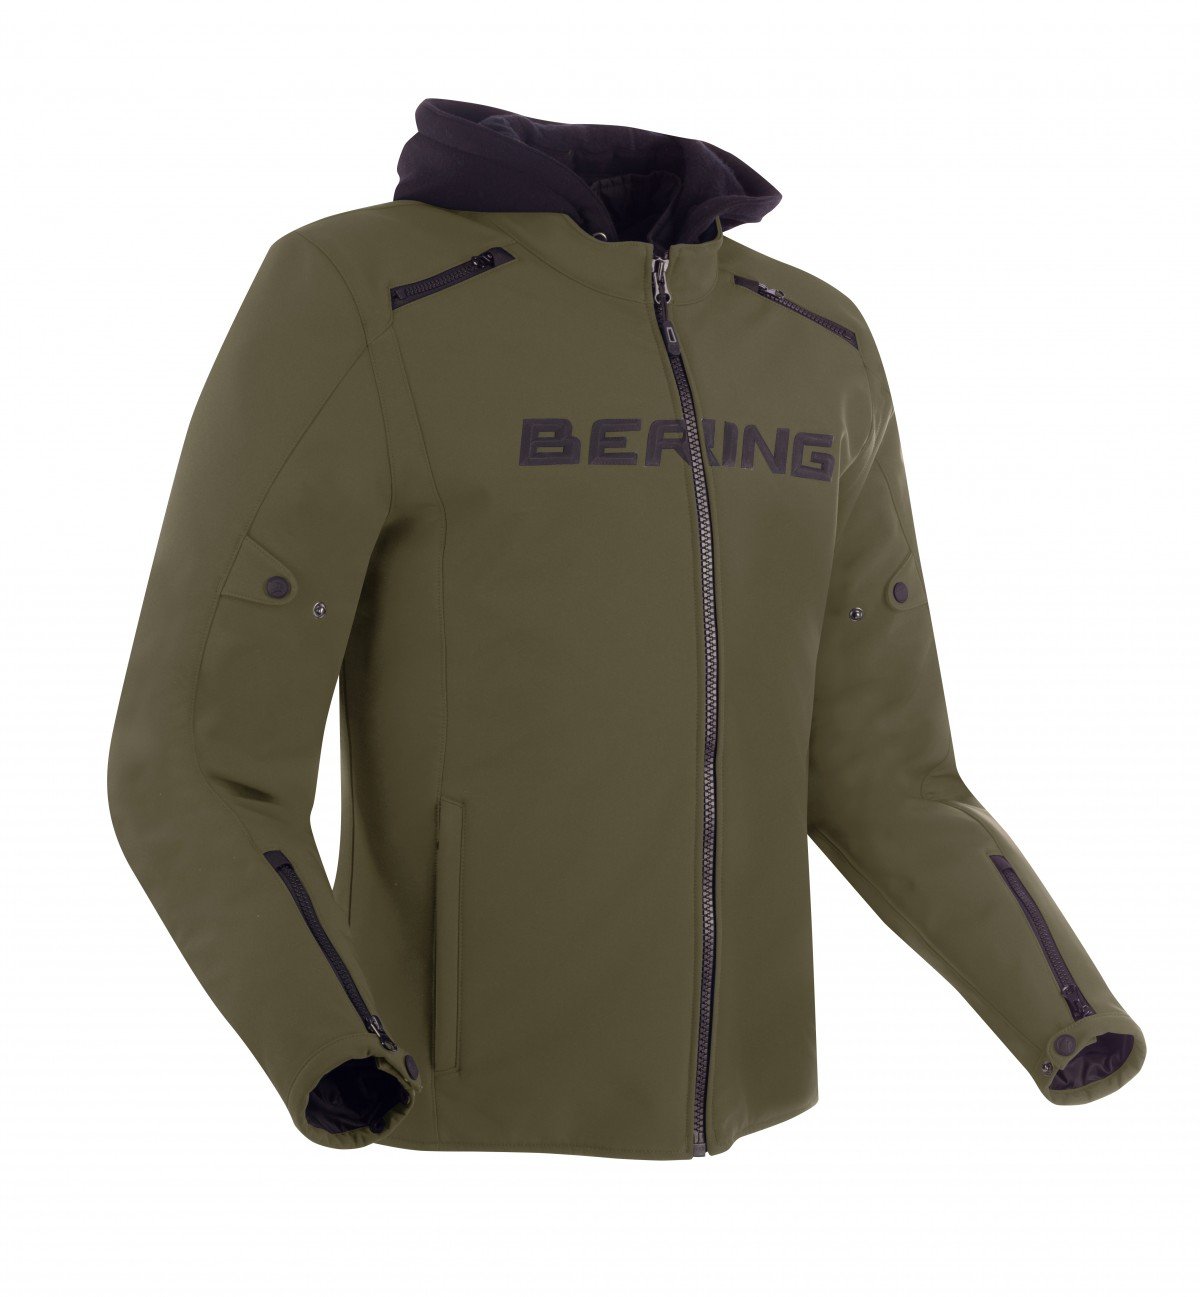 Image of Bering Elite Jacket Khaki Size M EN